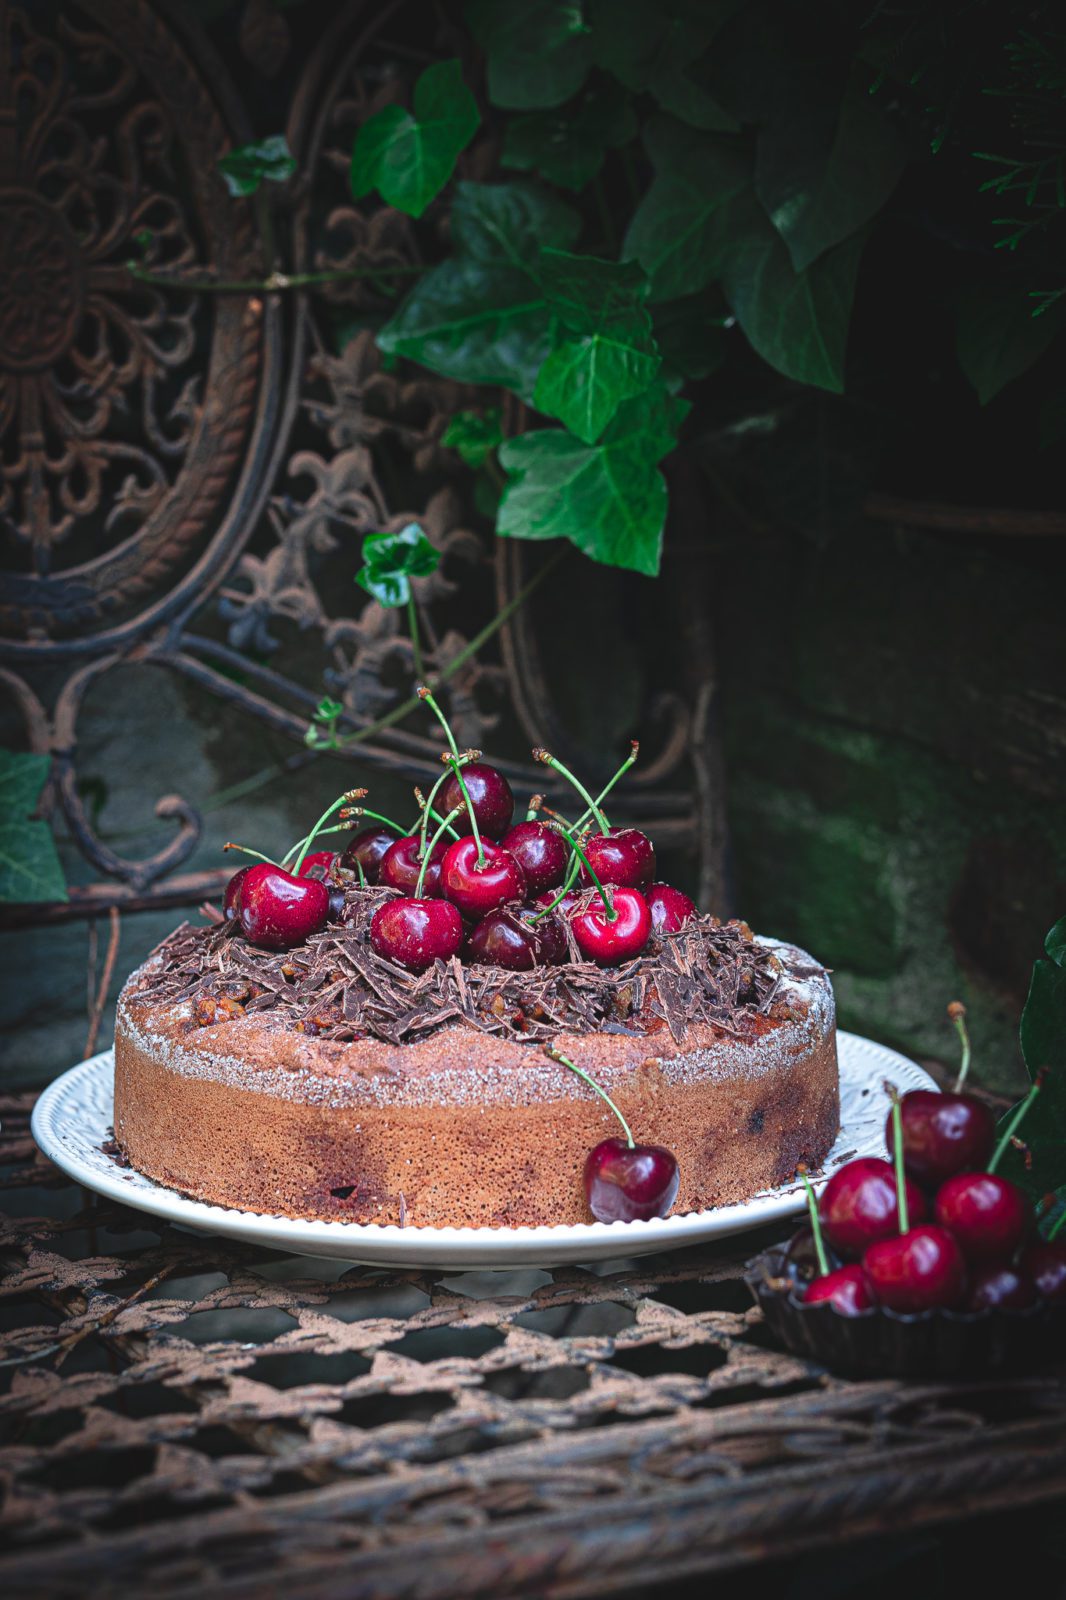 Sourdough Baked chocolate cherry cake with salty walnut cinnamon crust – easy sourdough discard recipe